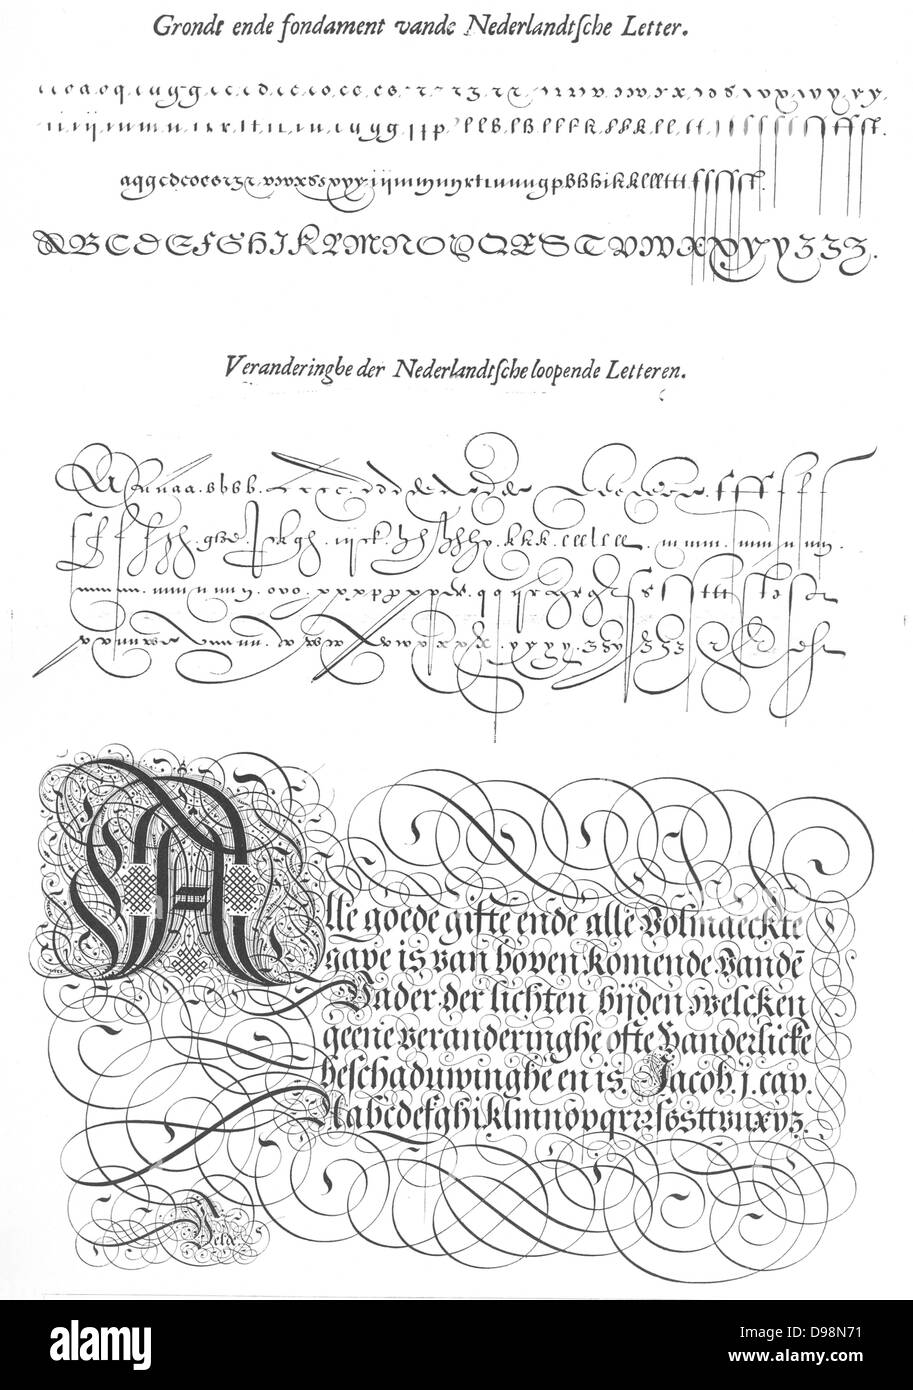 Examples of handwriting by the great Dutch scribe jan van der velde 1568-1623 Stock Photo